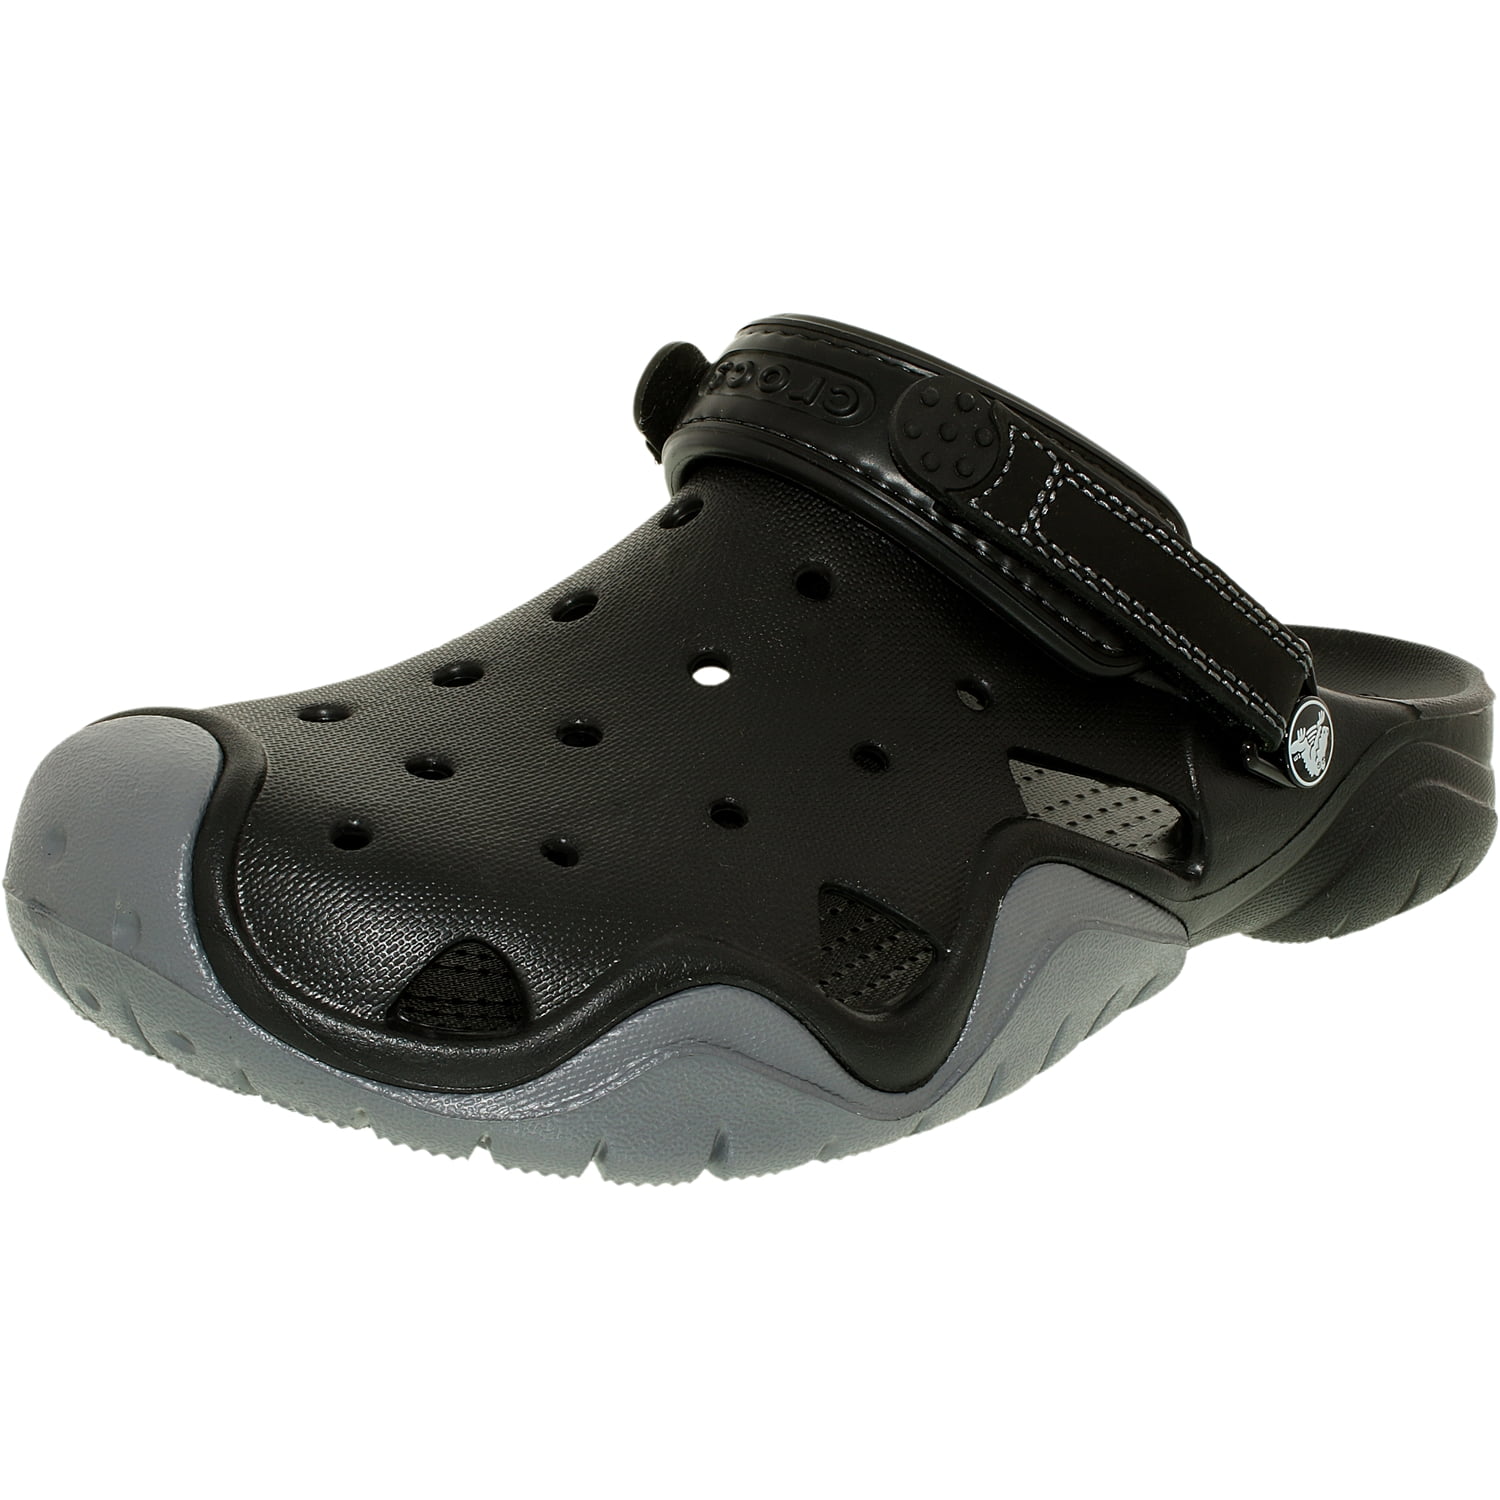 Crocs - Crocs Men's Swiftwater Black/Charcoal Ankle-High Rubber Flat ...